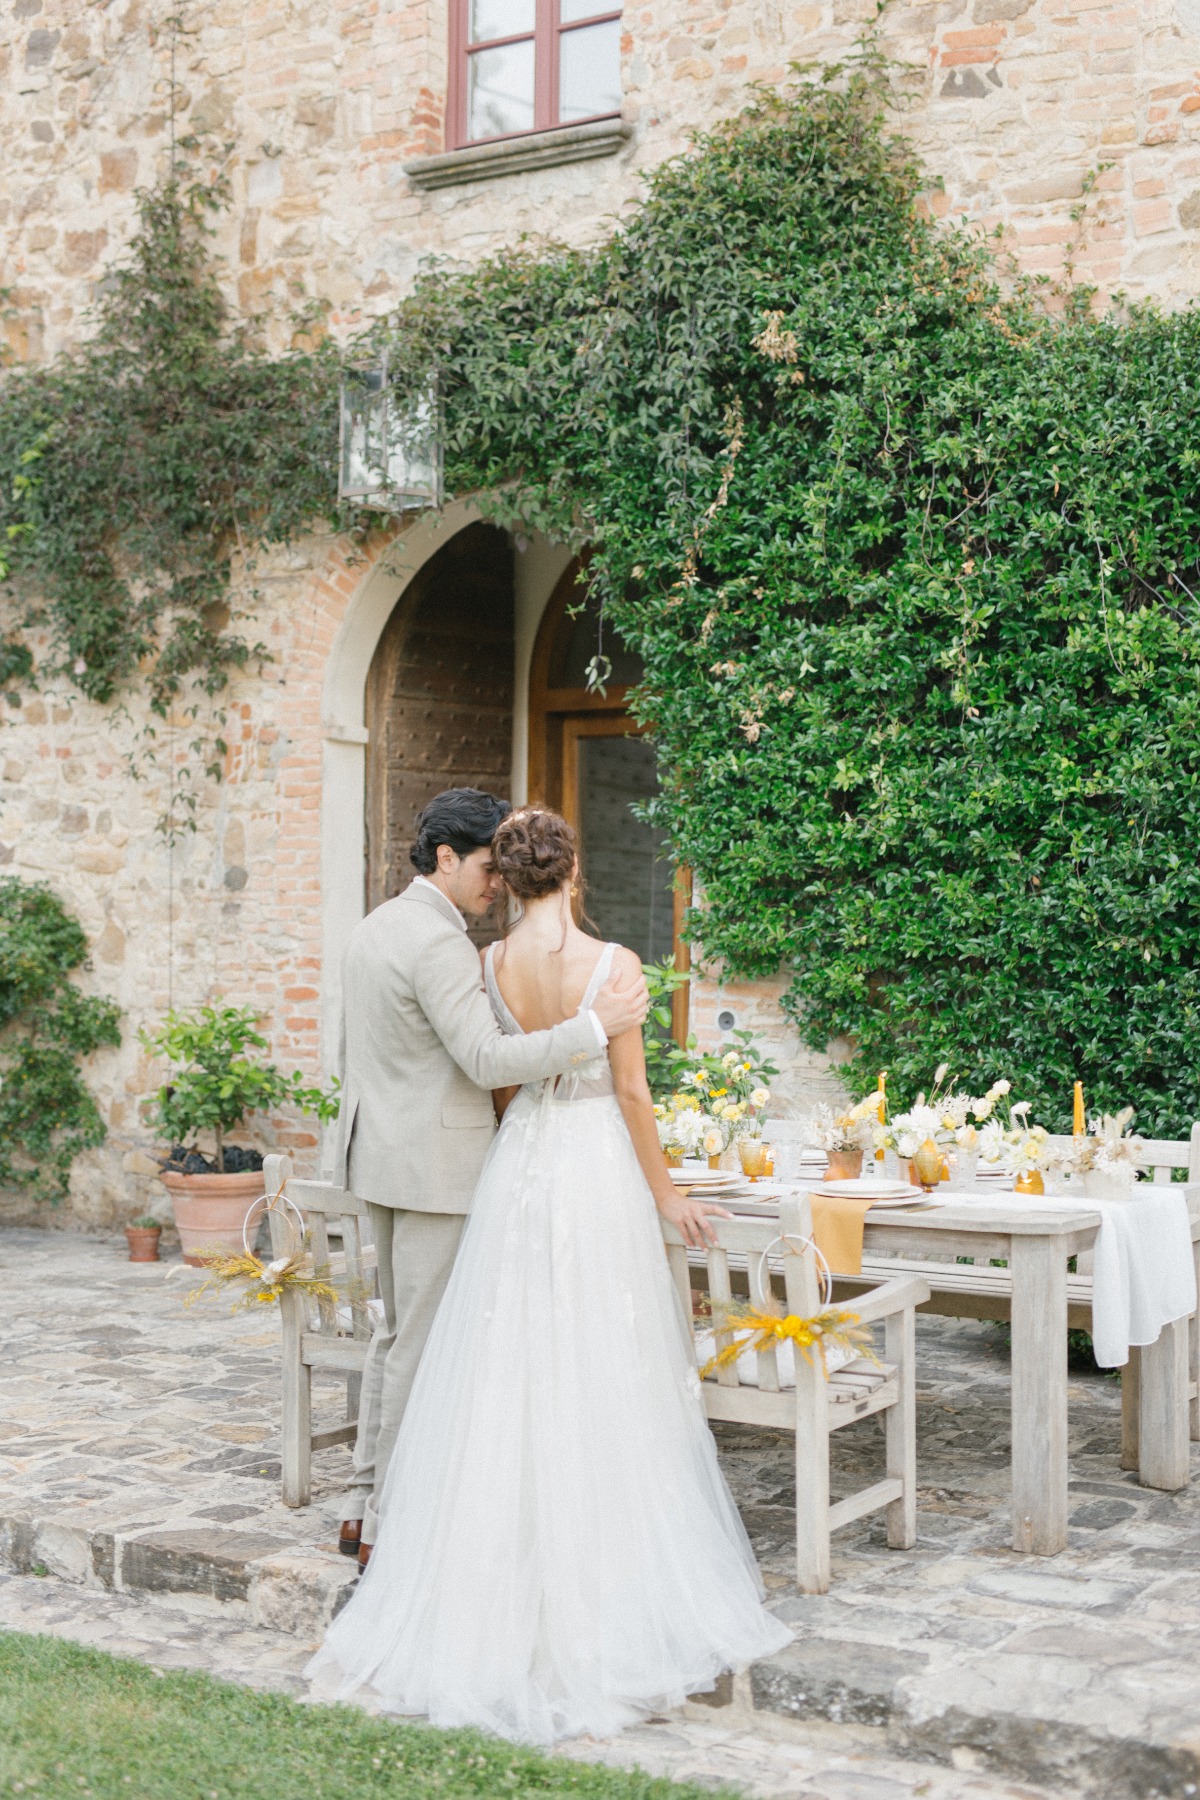 Dreamy Italian Countryside Wedding Inspiration